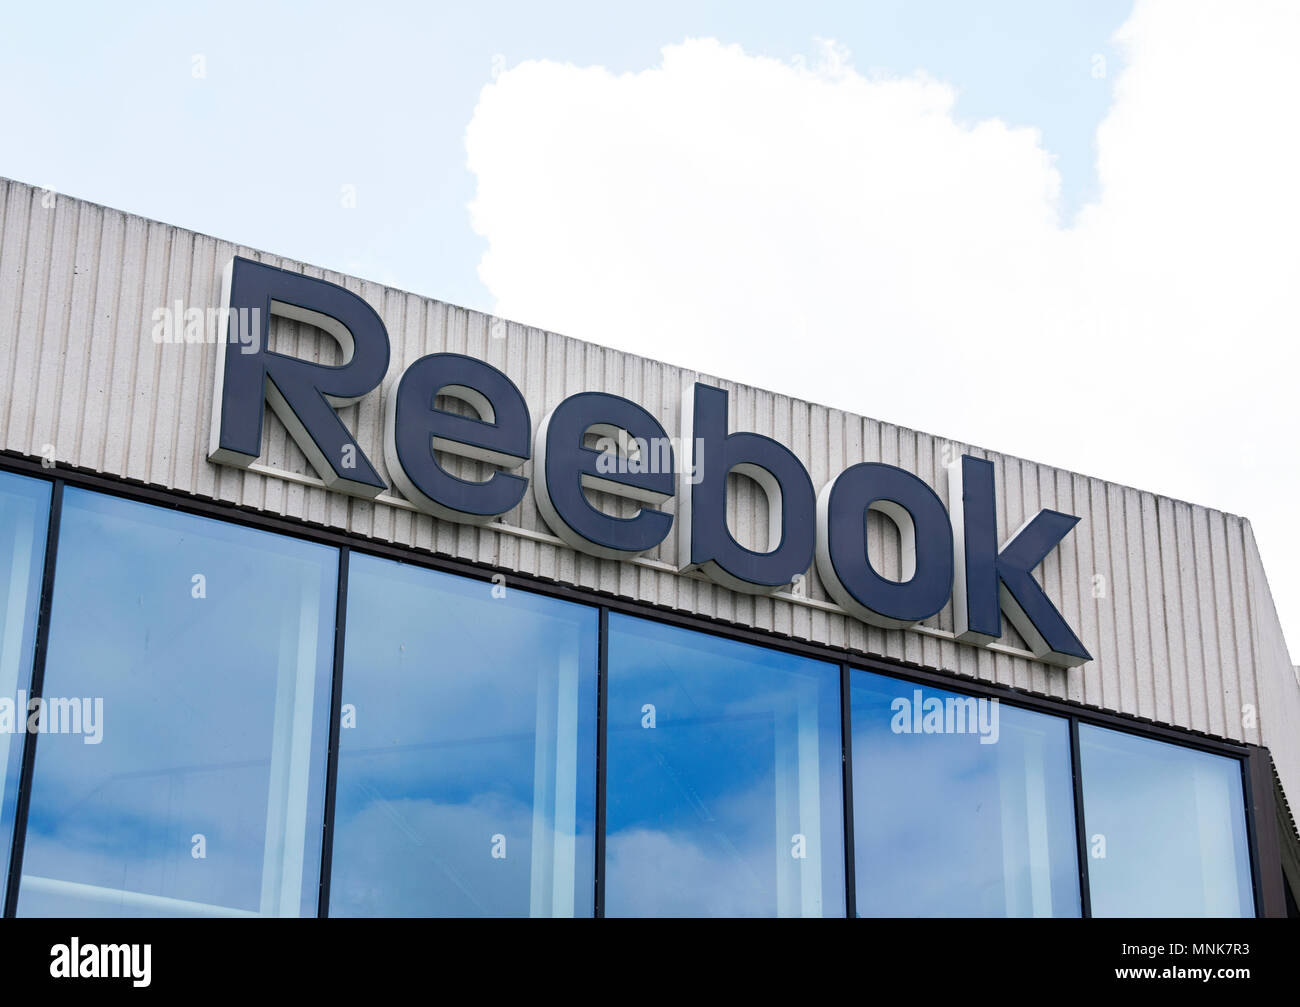 På forhånd Stue flyde Reebok sign -Fotos und -Bildmaterial in hoher Auflösung – Alamy